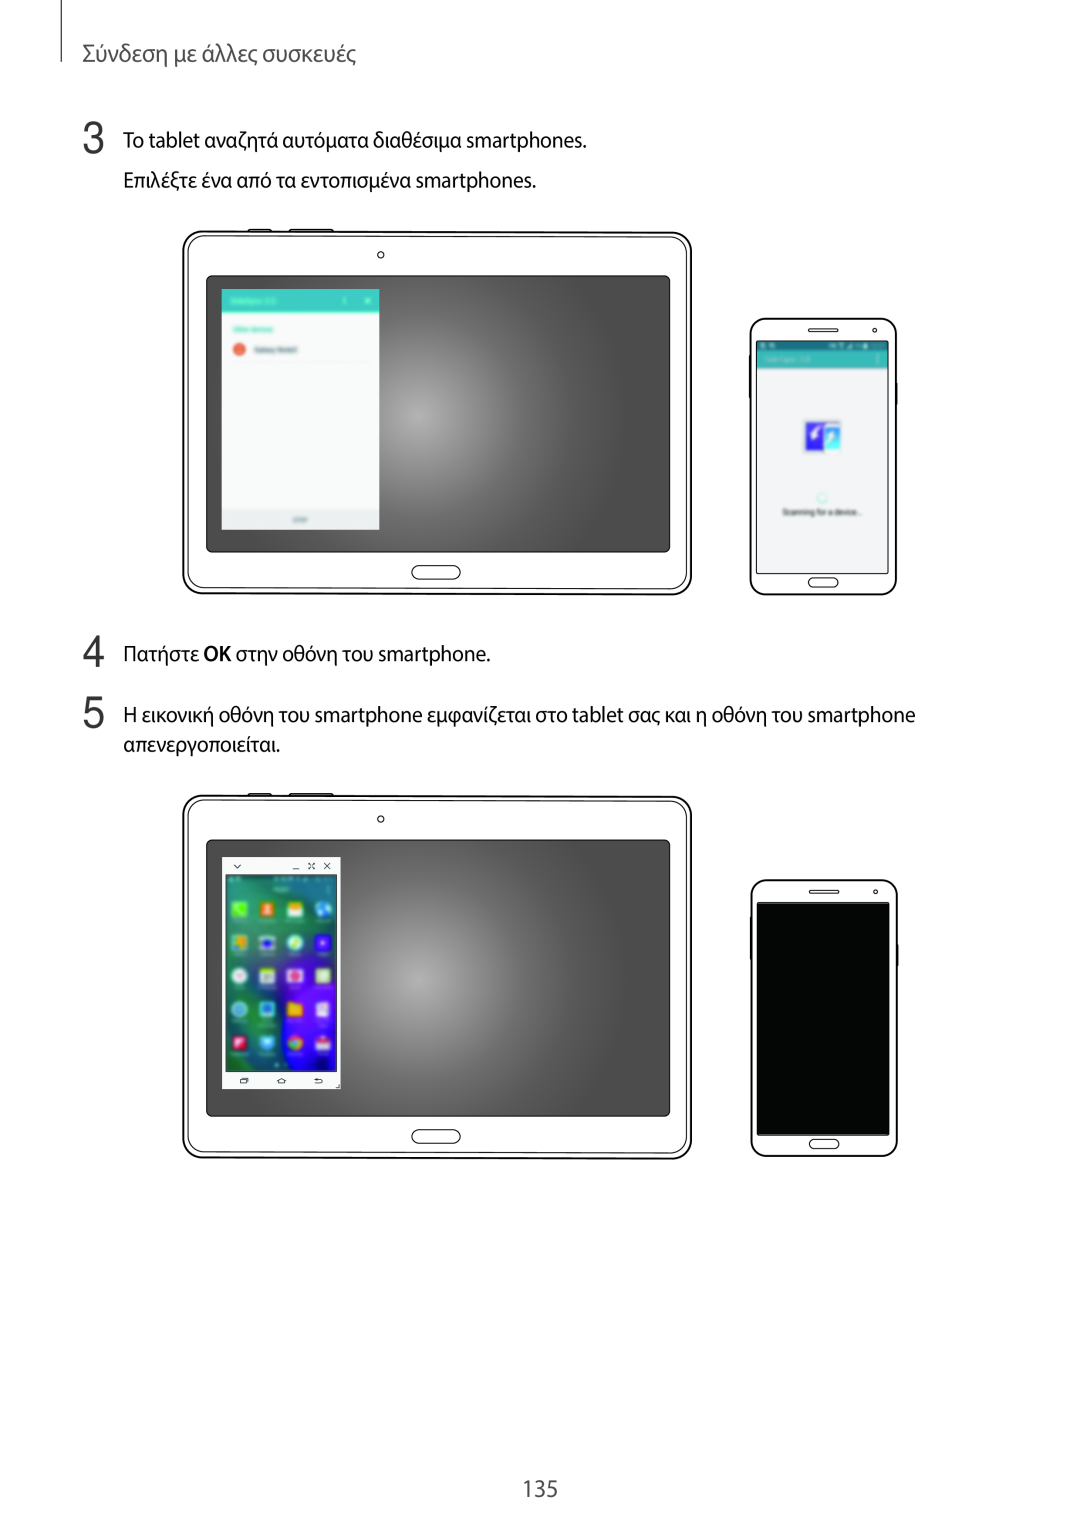 Samsung SM-T805NZWAEUR, SM-T805NTSAEUR manual Σύνδεση με άλλες συσκευές, Πατήστε OK στην οθόνη του smartphone 